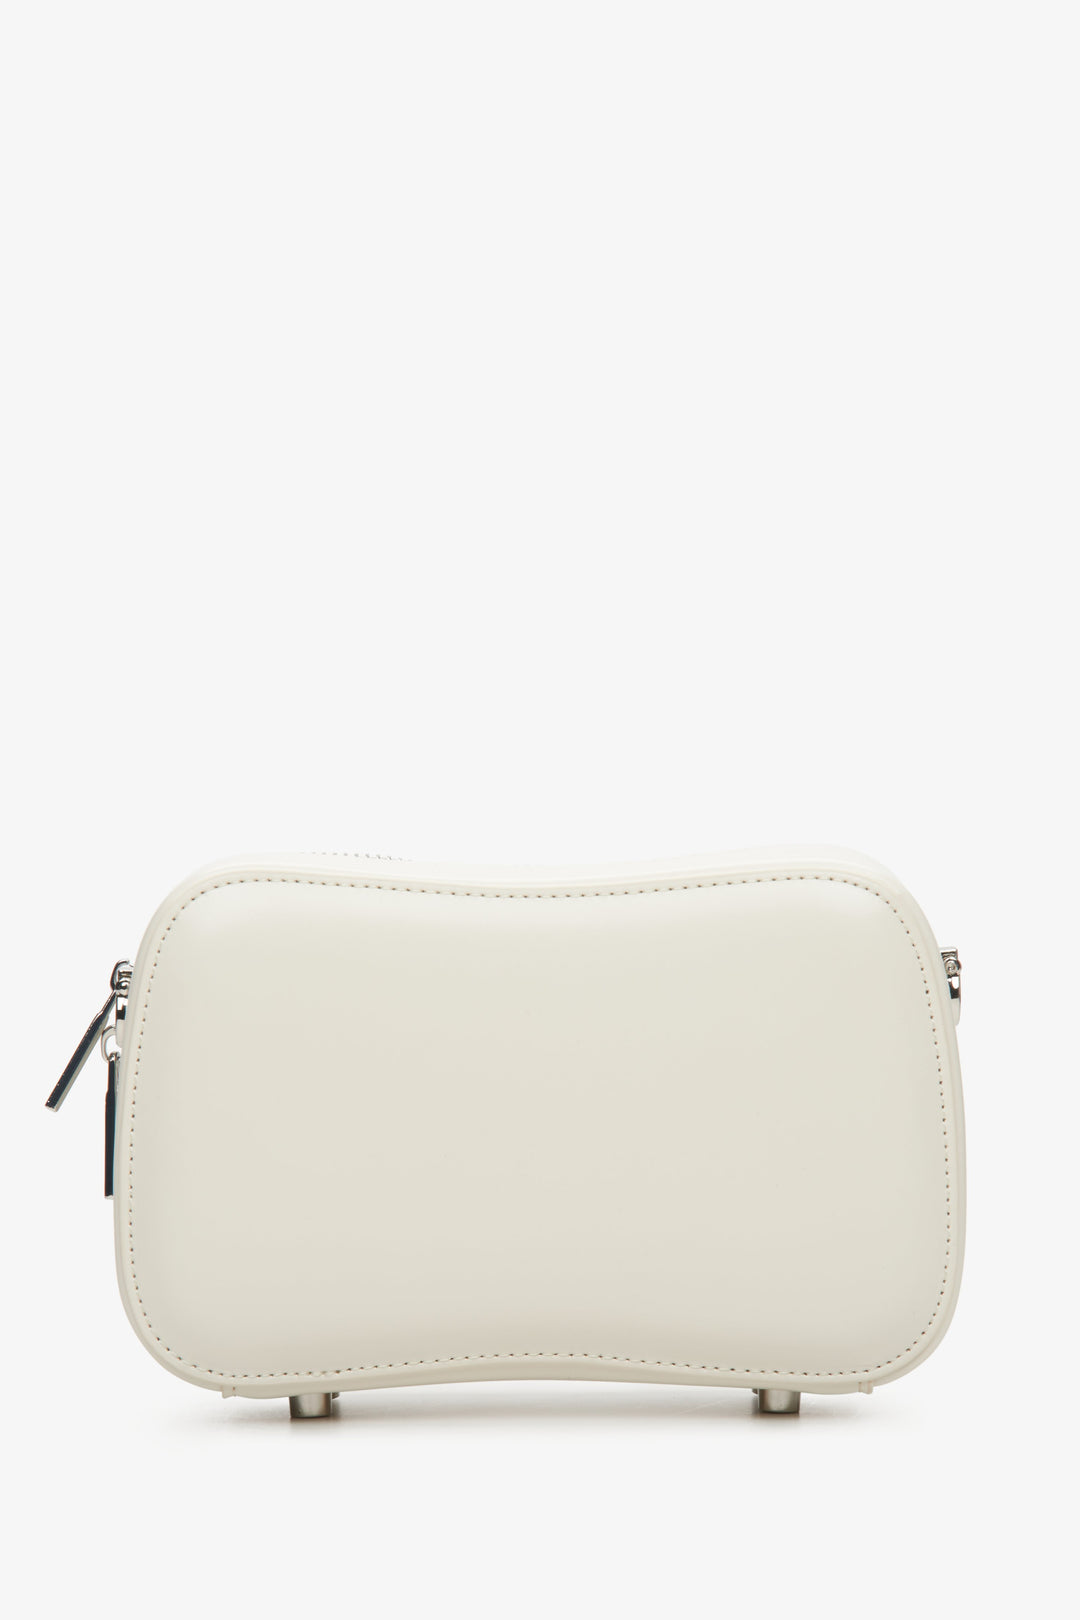 Small women's handbag made of genuine light beige leather by Estro.